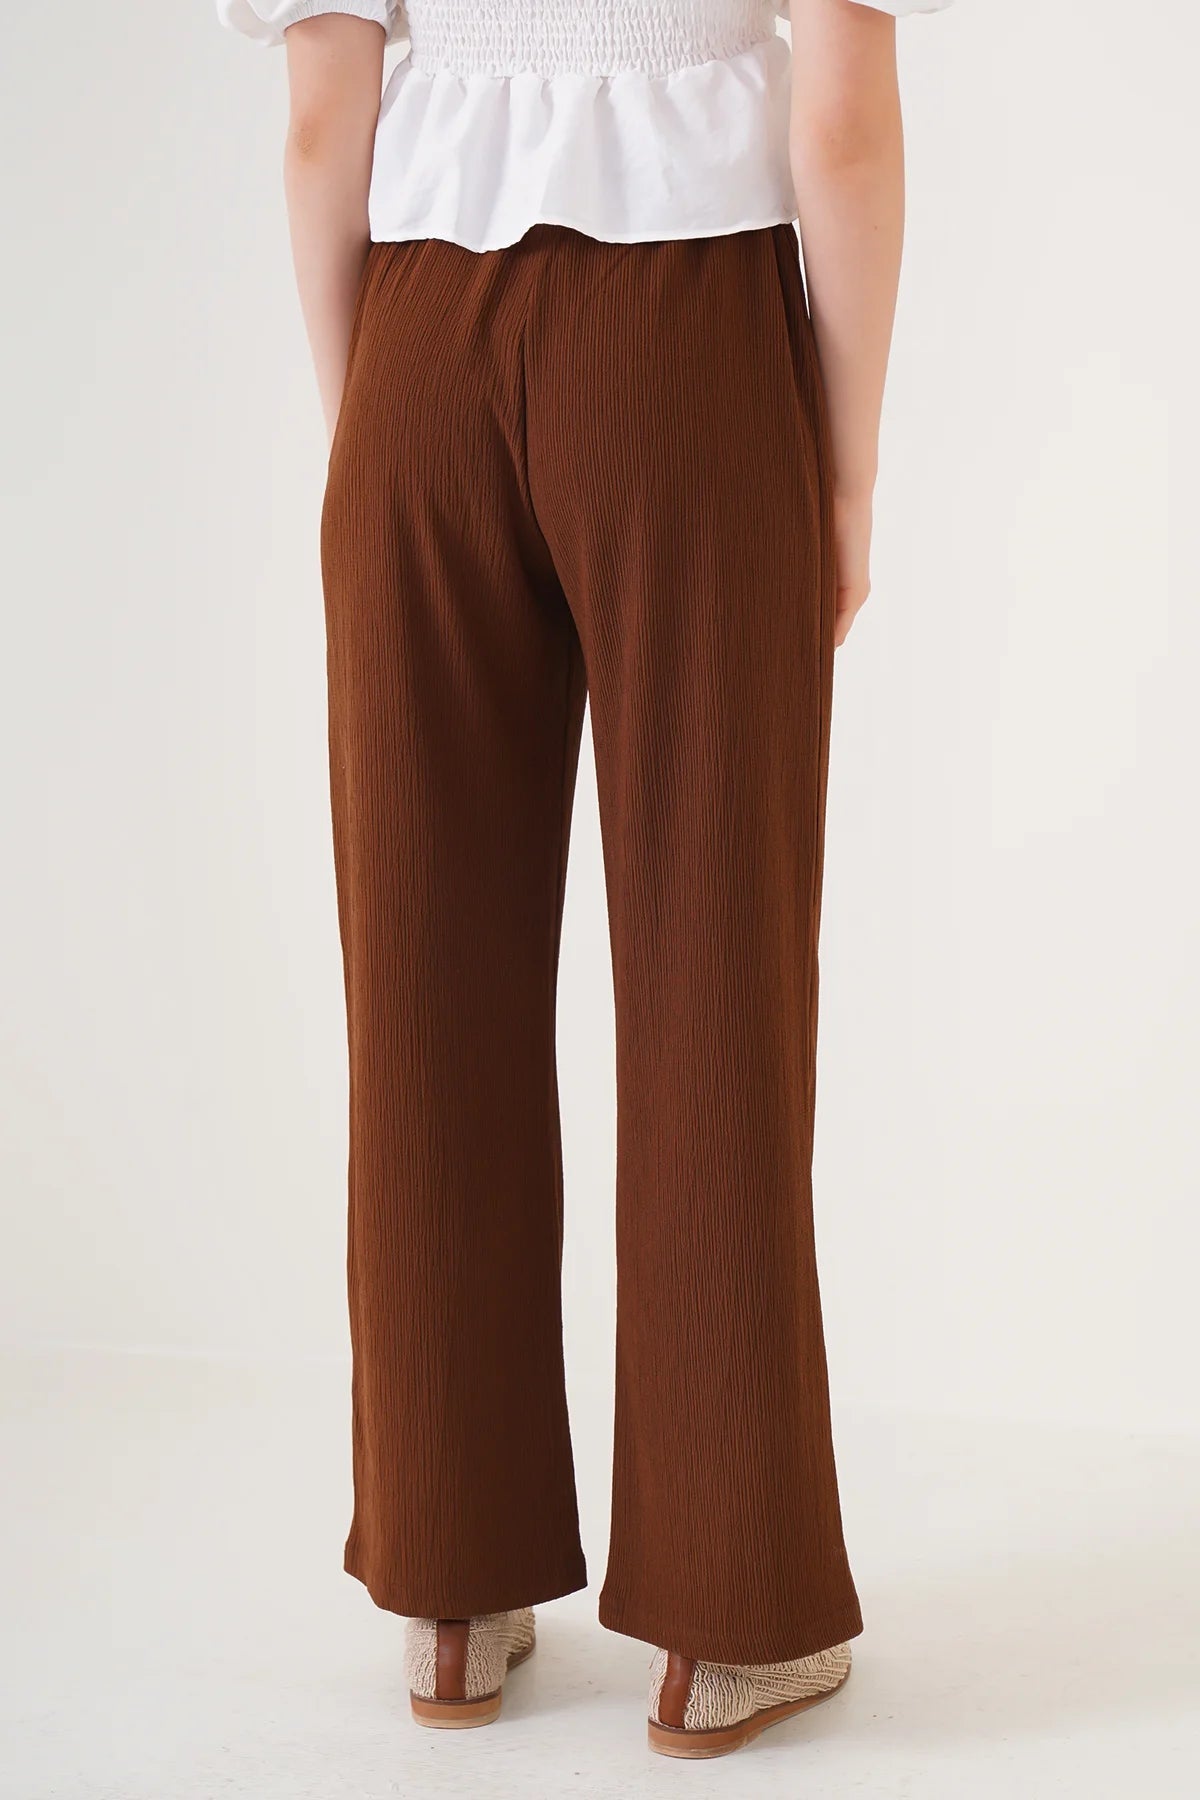 Buy Women Brown Solid Formal Regular Fit Trousers Online - 799417